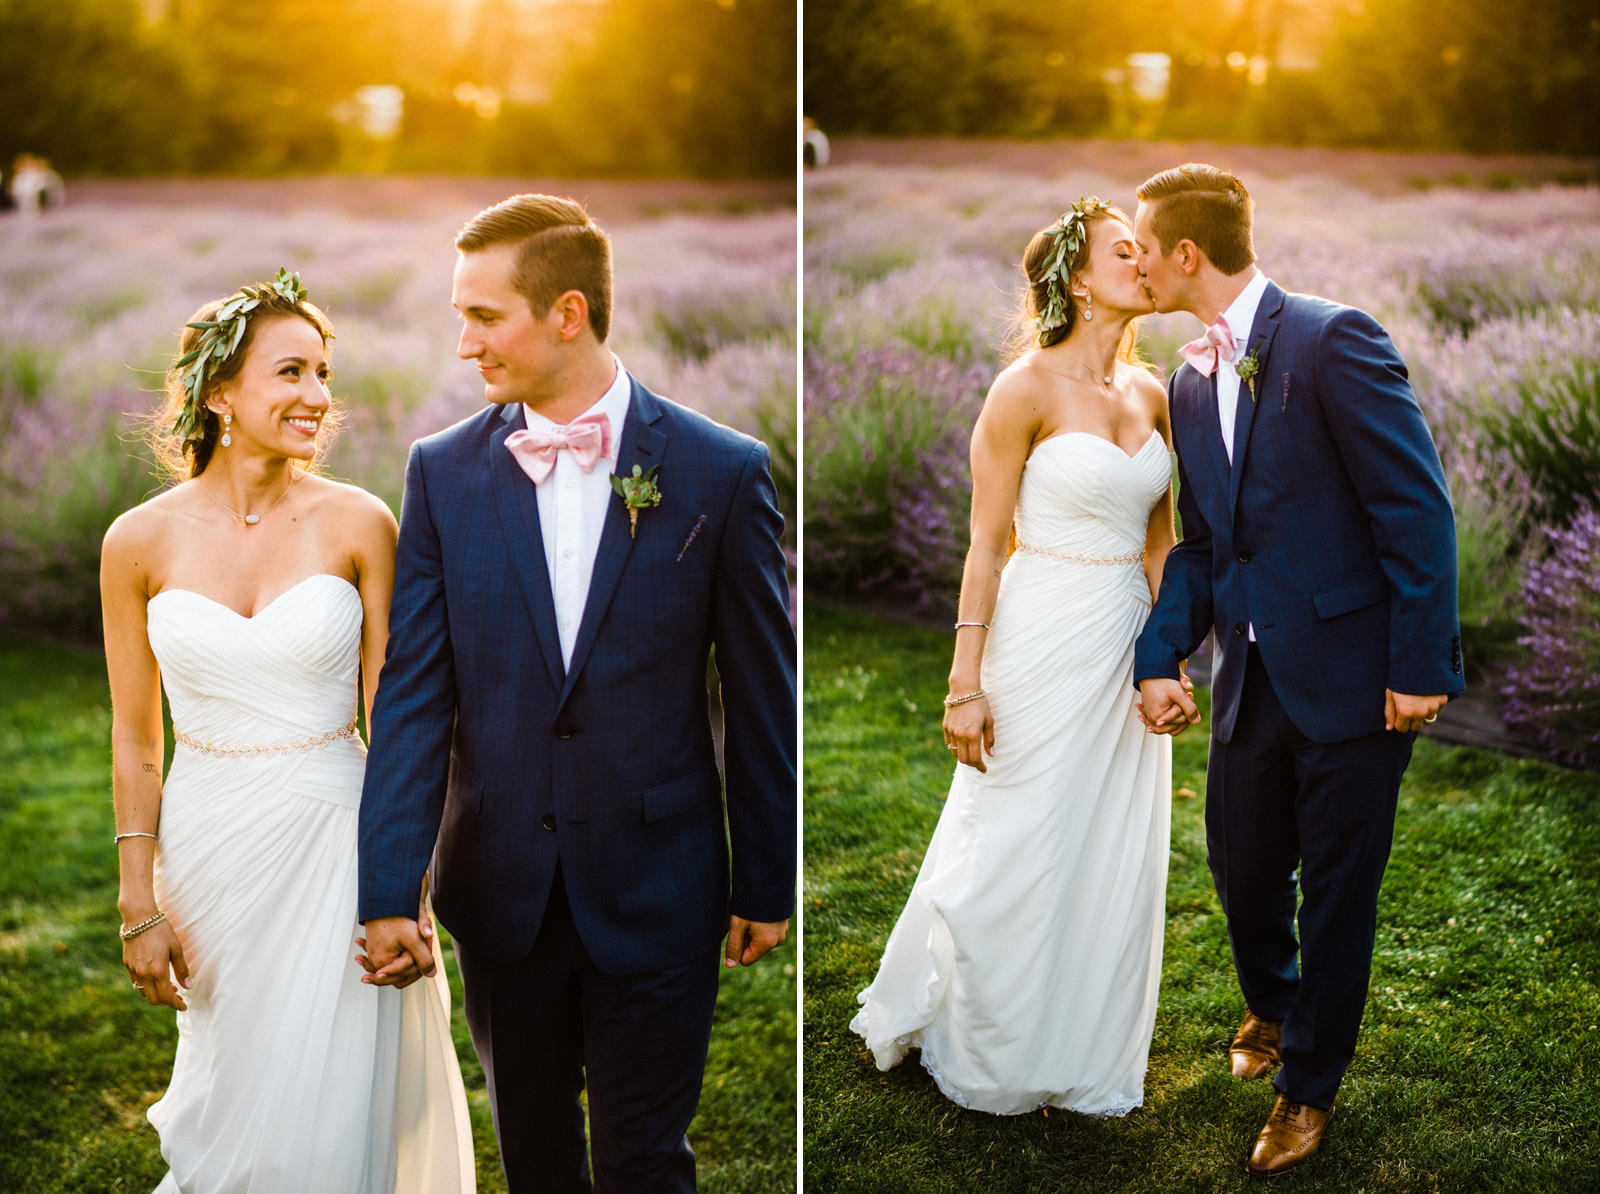 101-woodinville-lavendar-farm-wedding-with-golden-glowy-photos.jpg